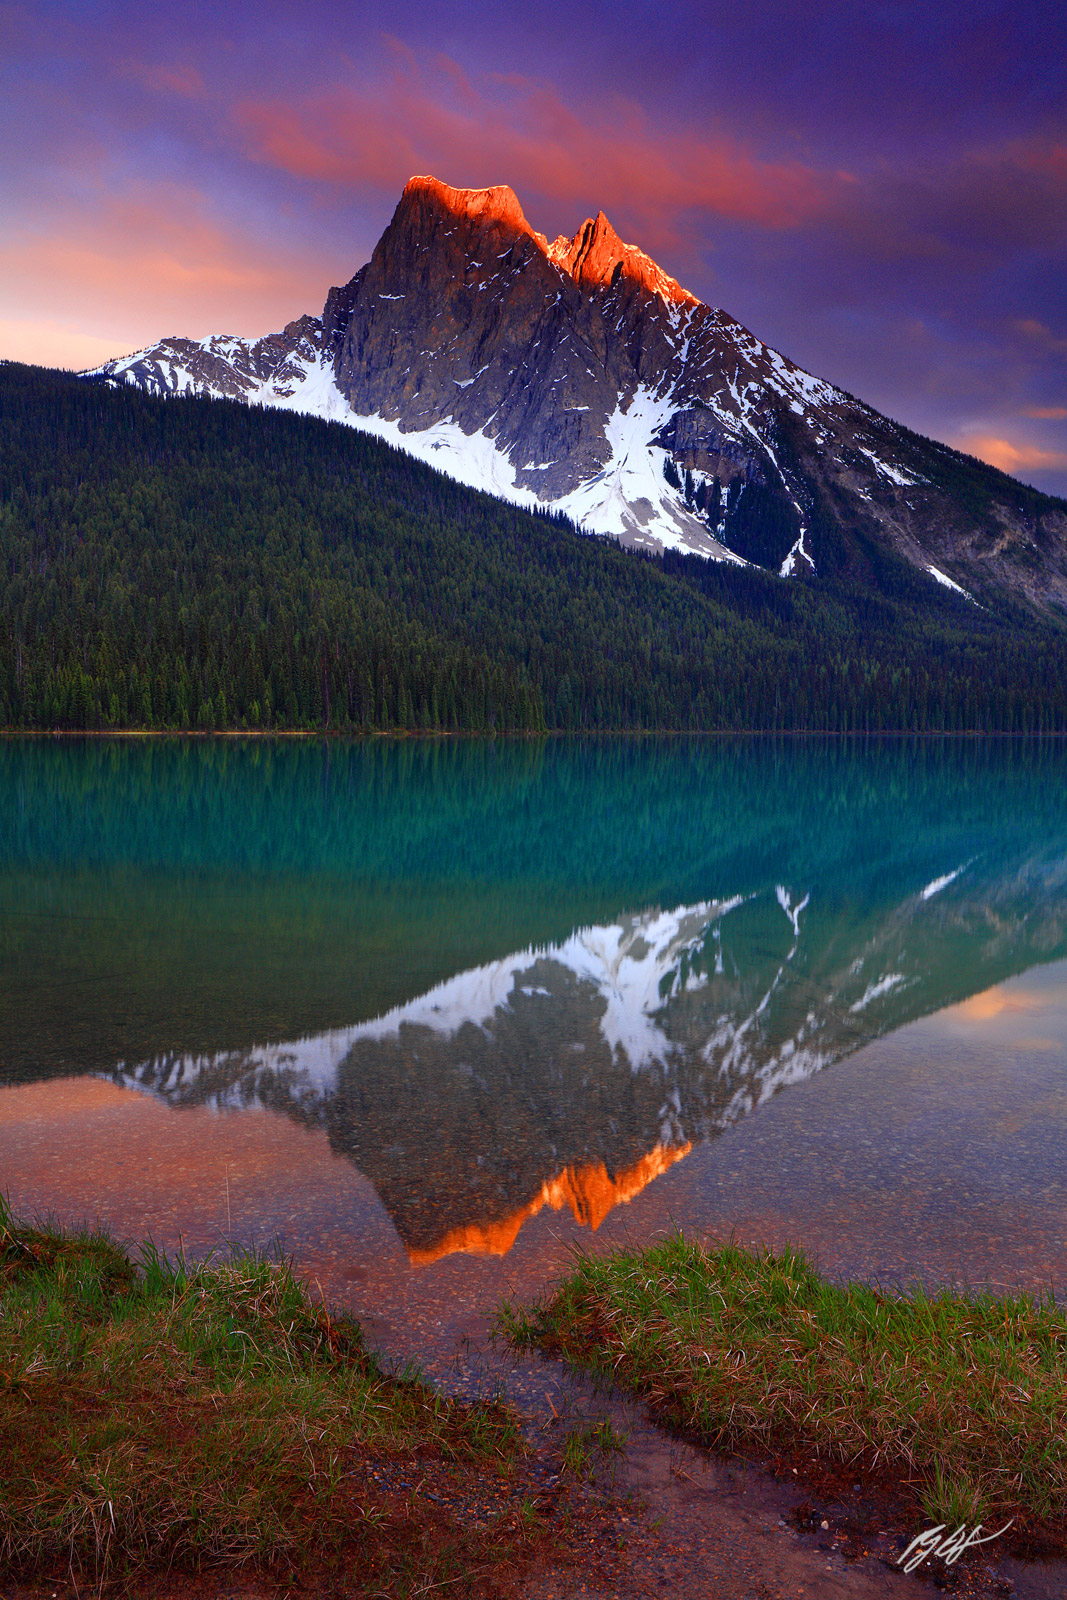 Sunset Wapta Mountain Reflected in Emerald Lake in Yoho National Park in British Columbia, Canada